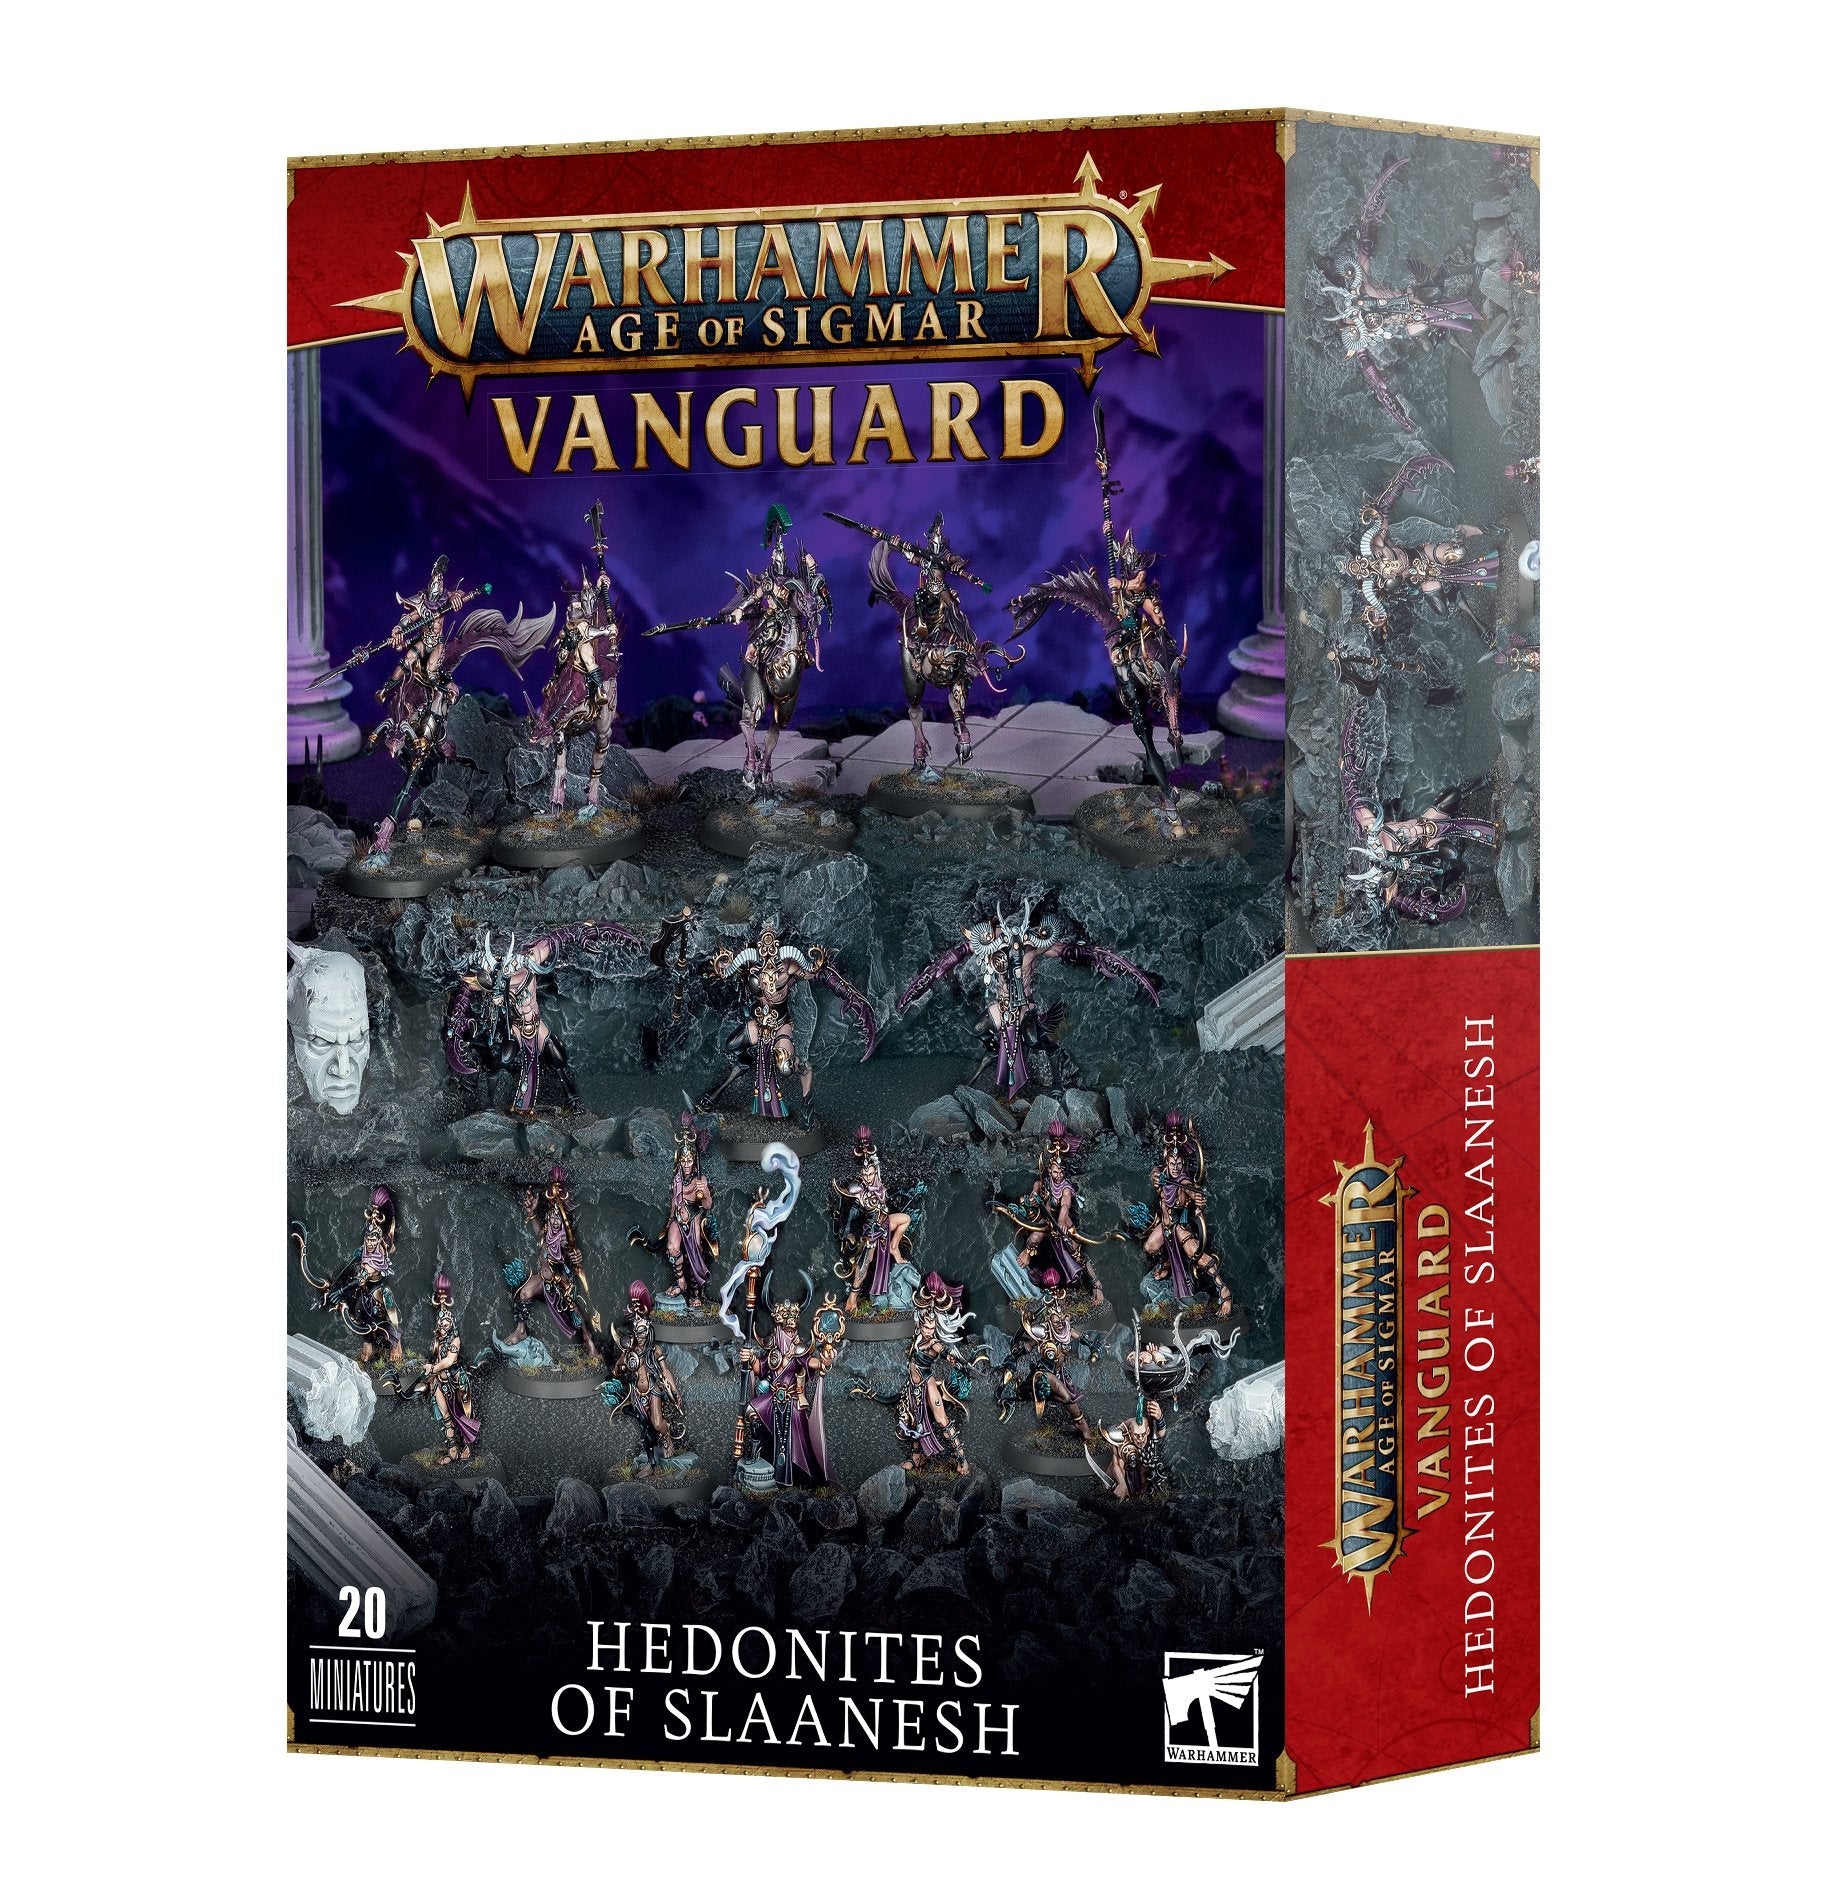 Hedonites of Slaanesh Vanguard box